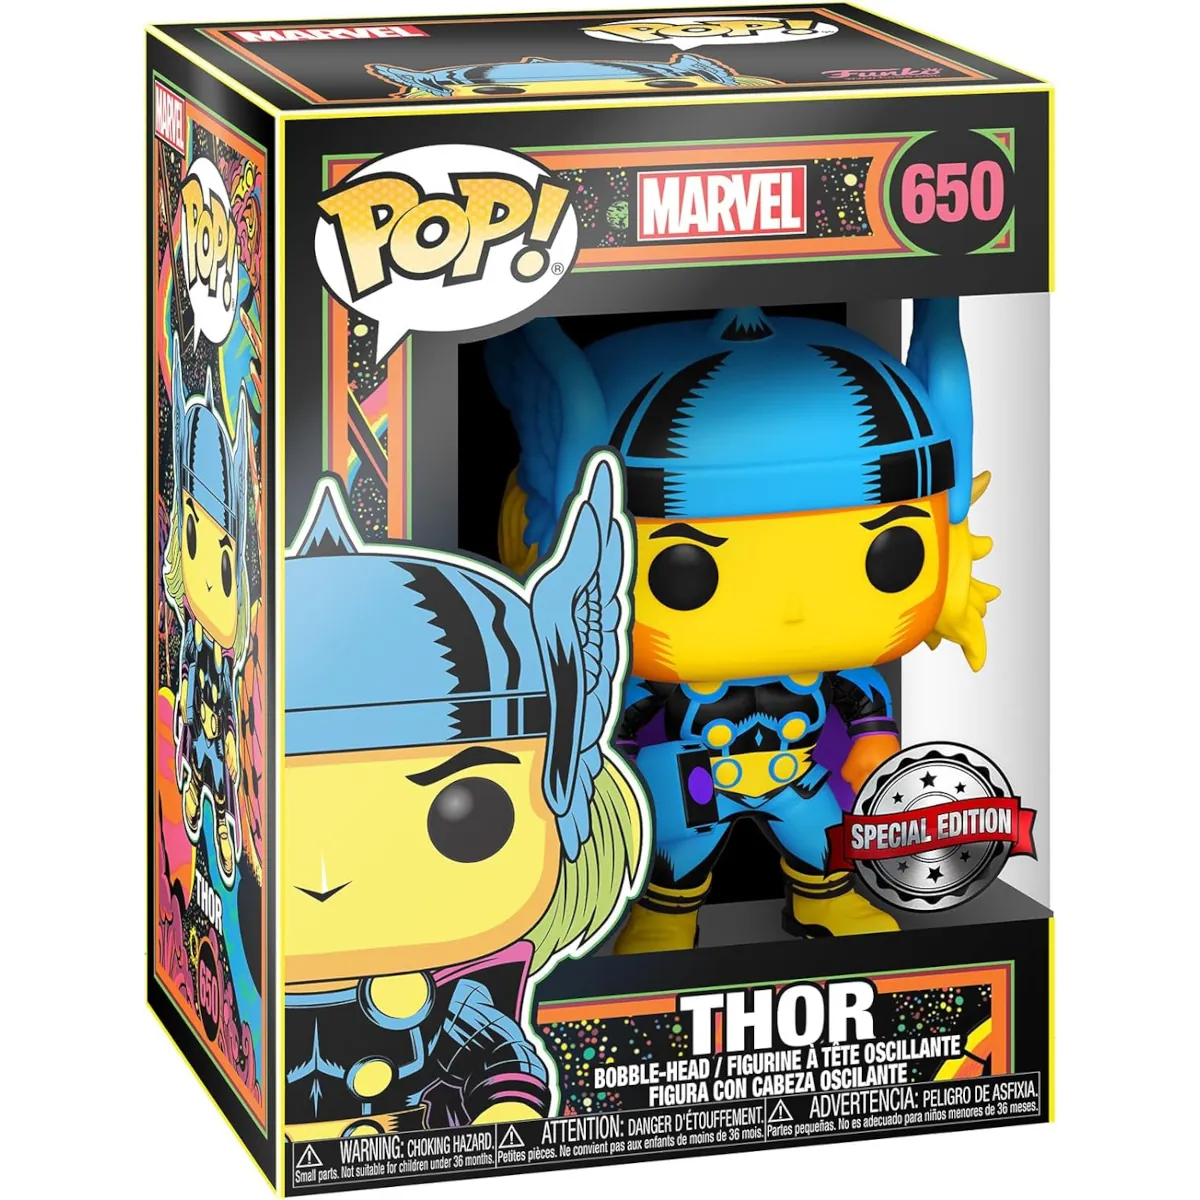 Funko Pop! Marvel Thor (Blacklight) Collectable Vinyl Figure Box